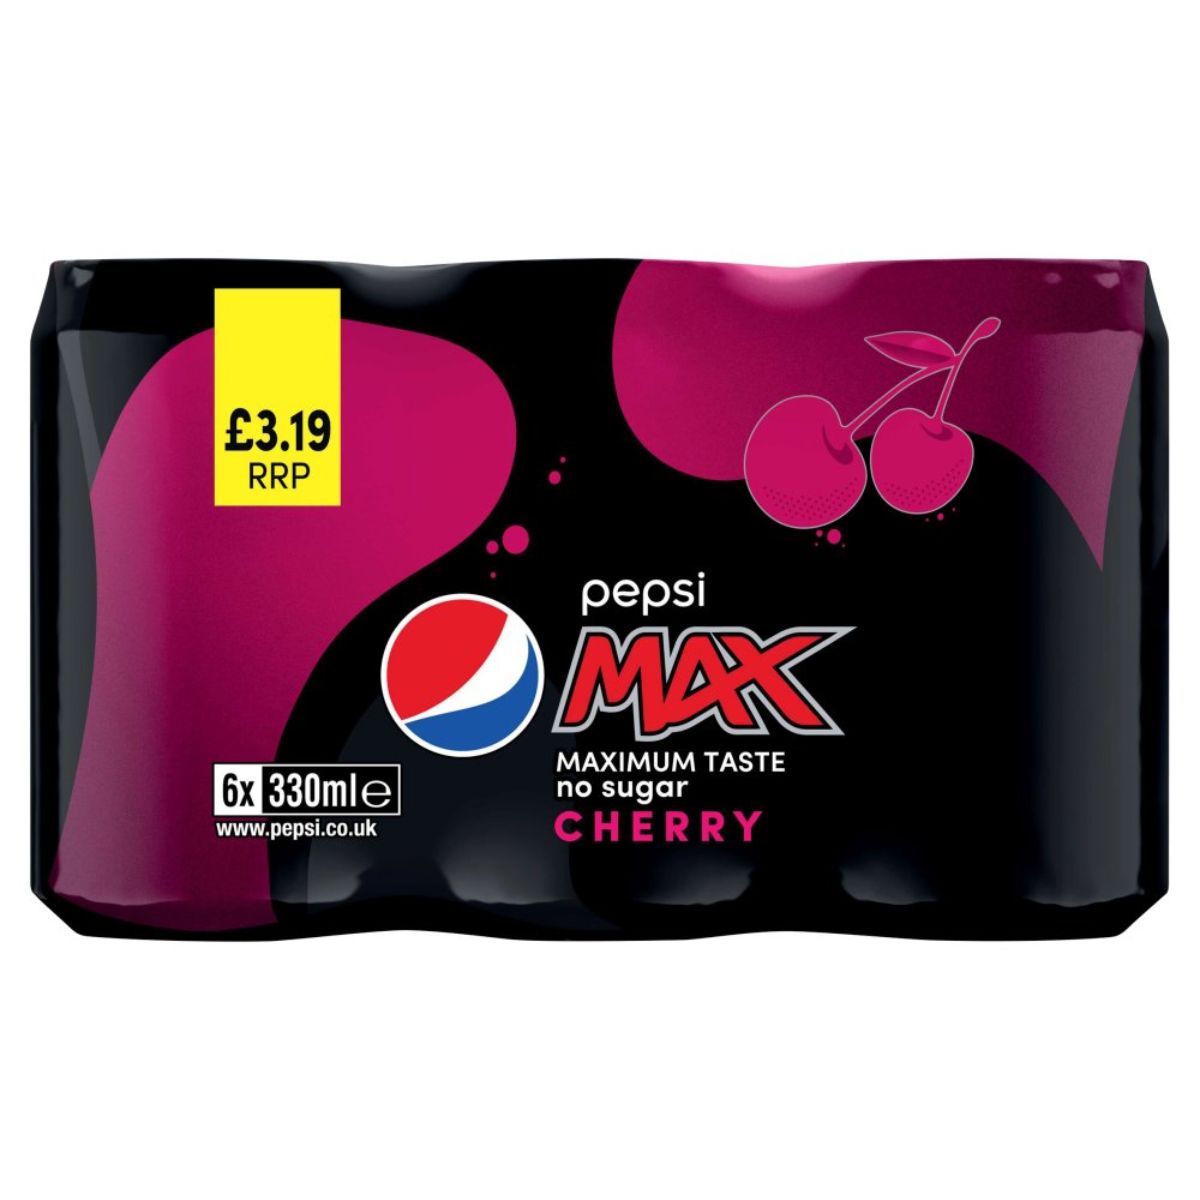 A pack of Pepsi - Max Cherry - 6 x 330ml.